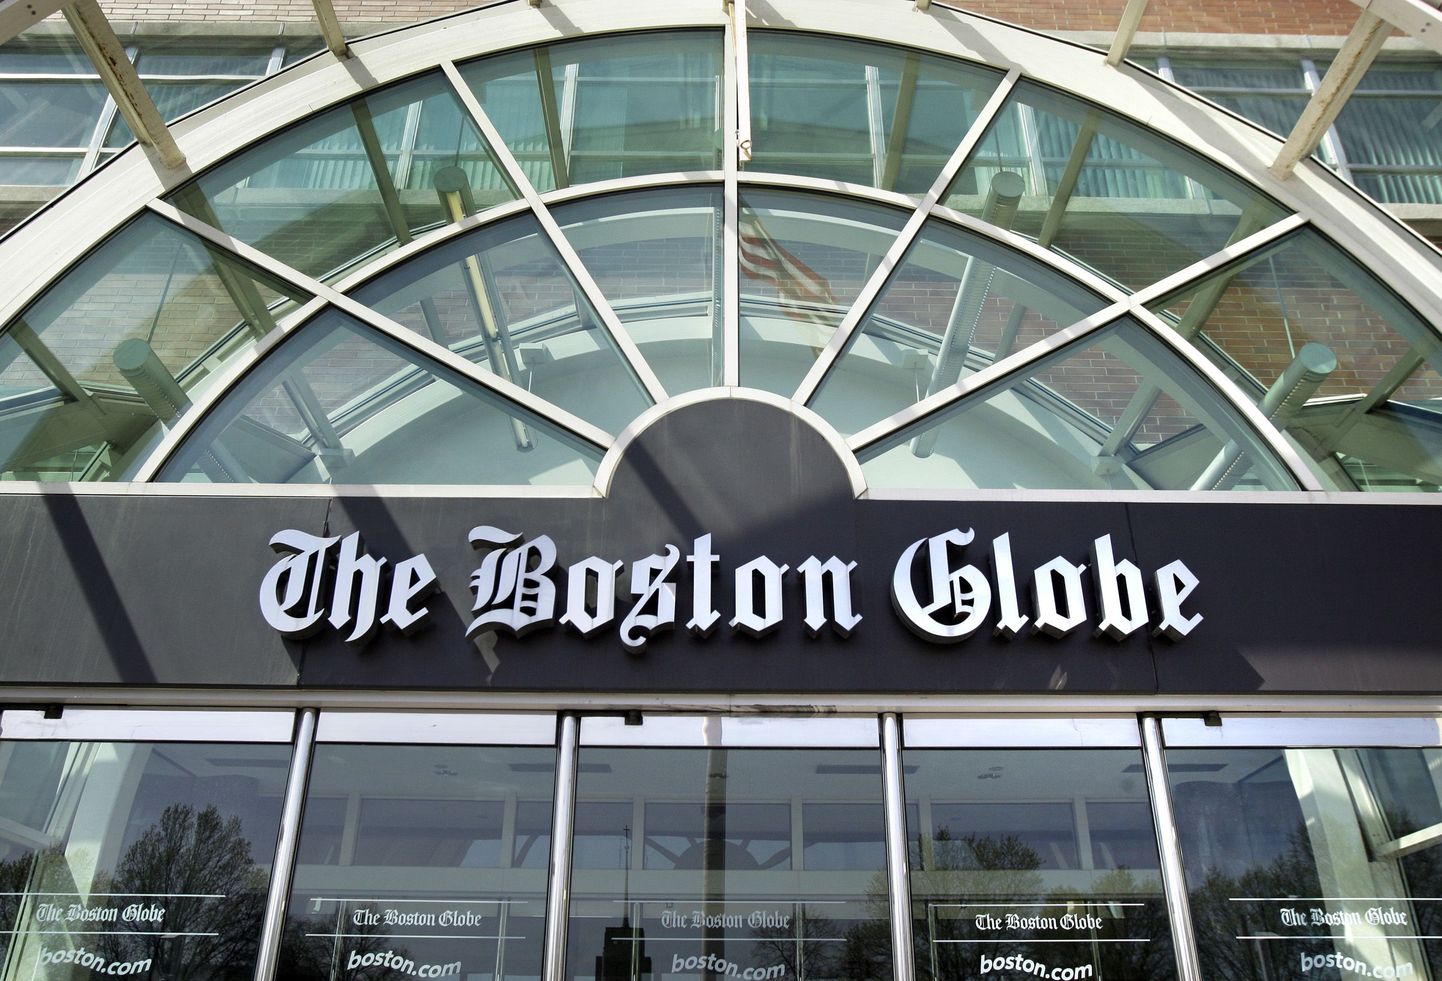 Boston Globe'i hoone fassaad Bostonis.